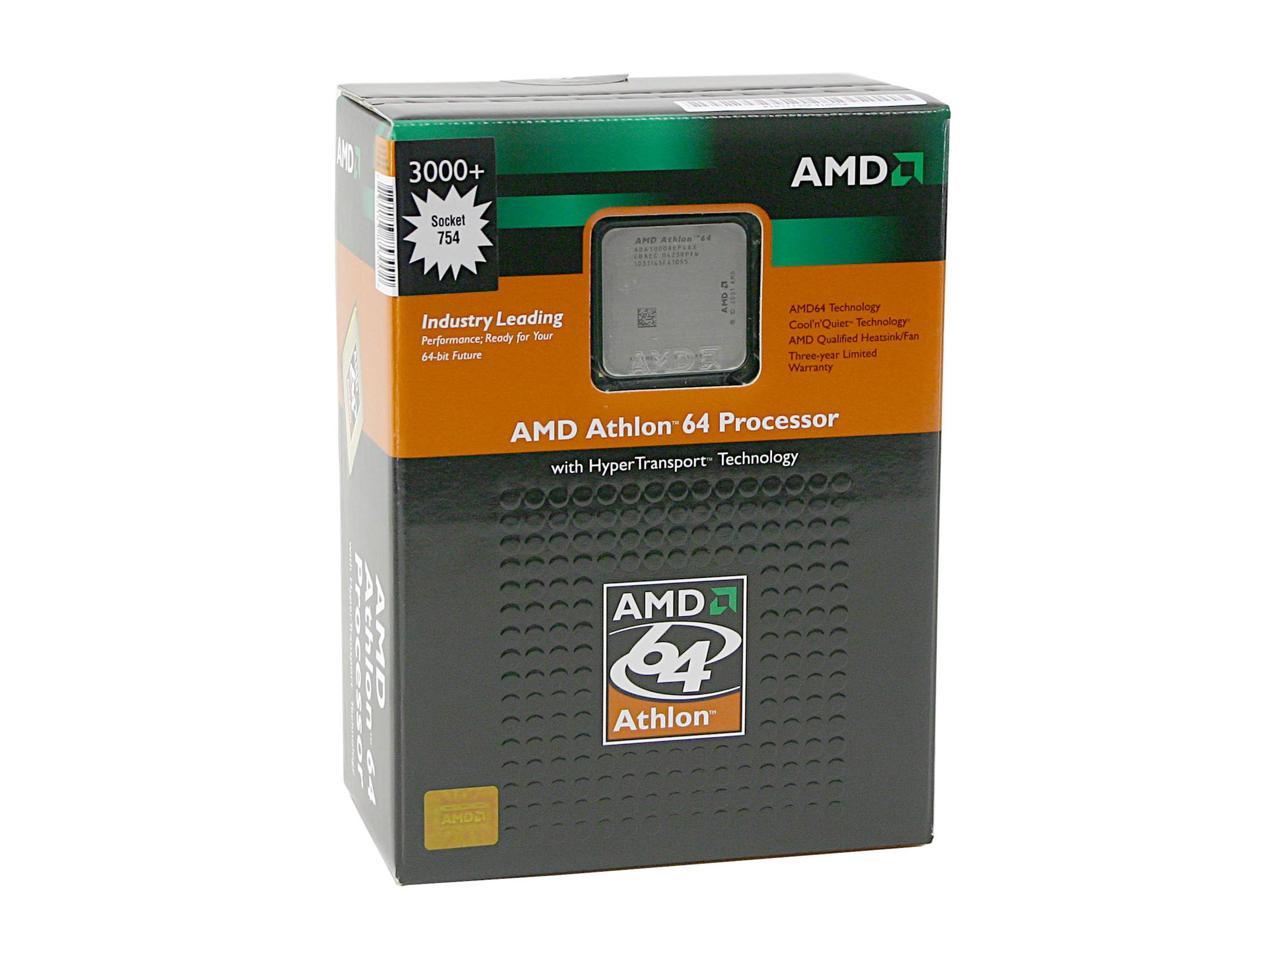 Amd athlon 4400. Athlon 64 3000+ 754 Box. Athlon 3000+ 939 Box. Athlon 5150 Box. AMD Athlon-2800 Processor.